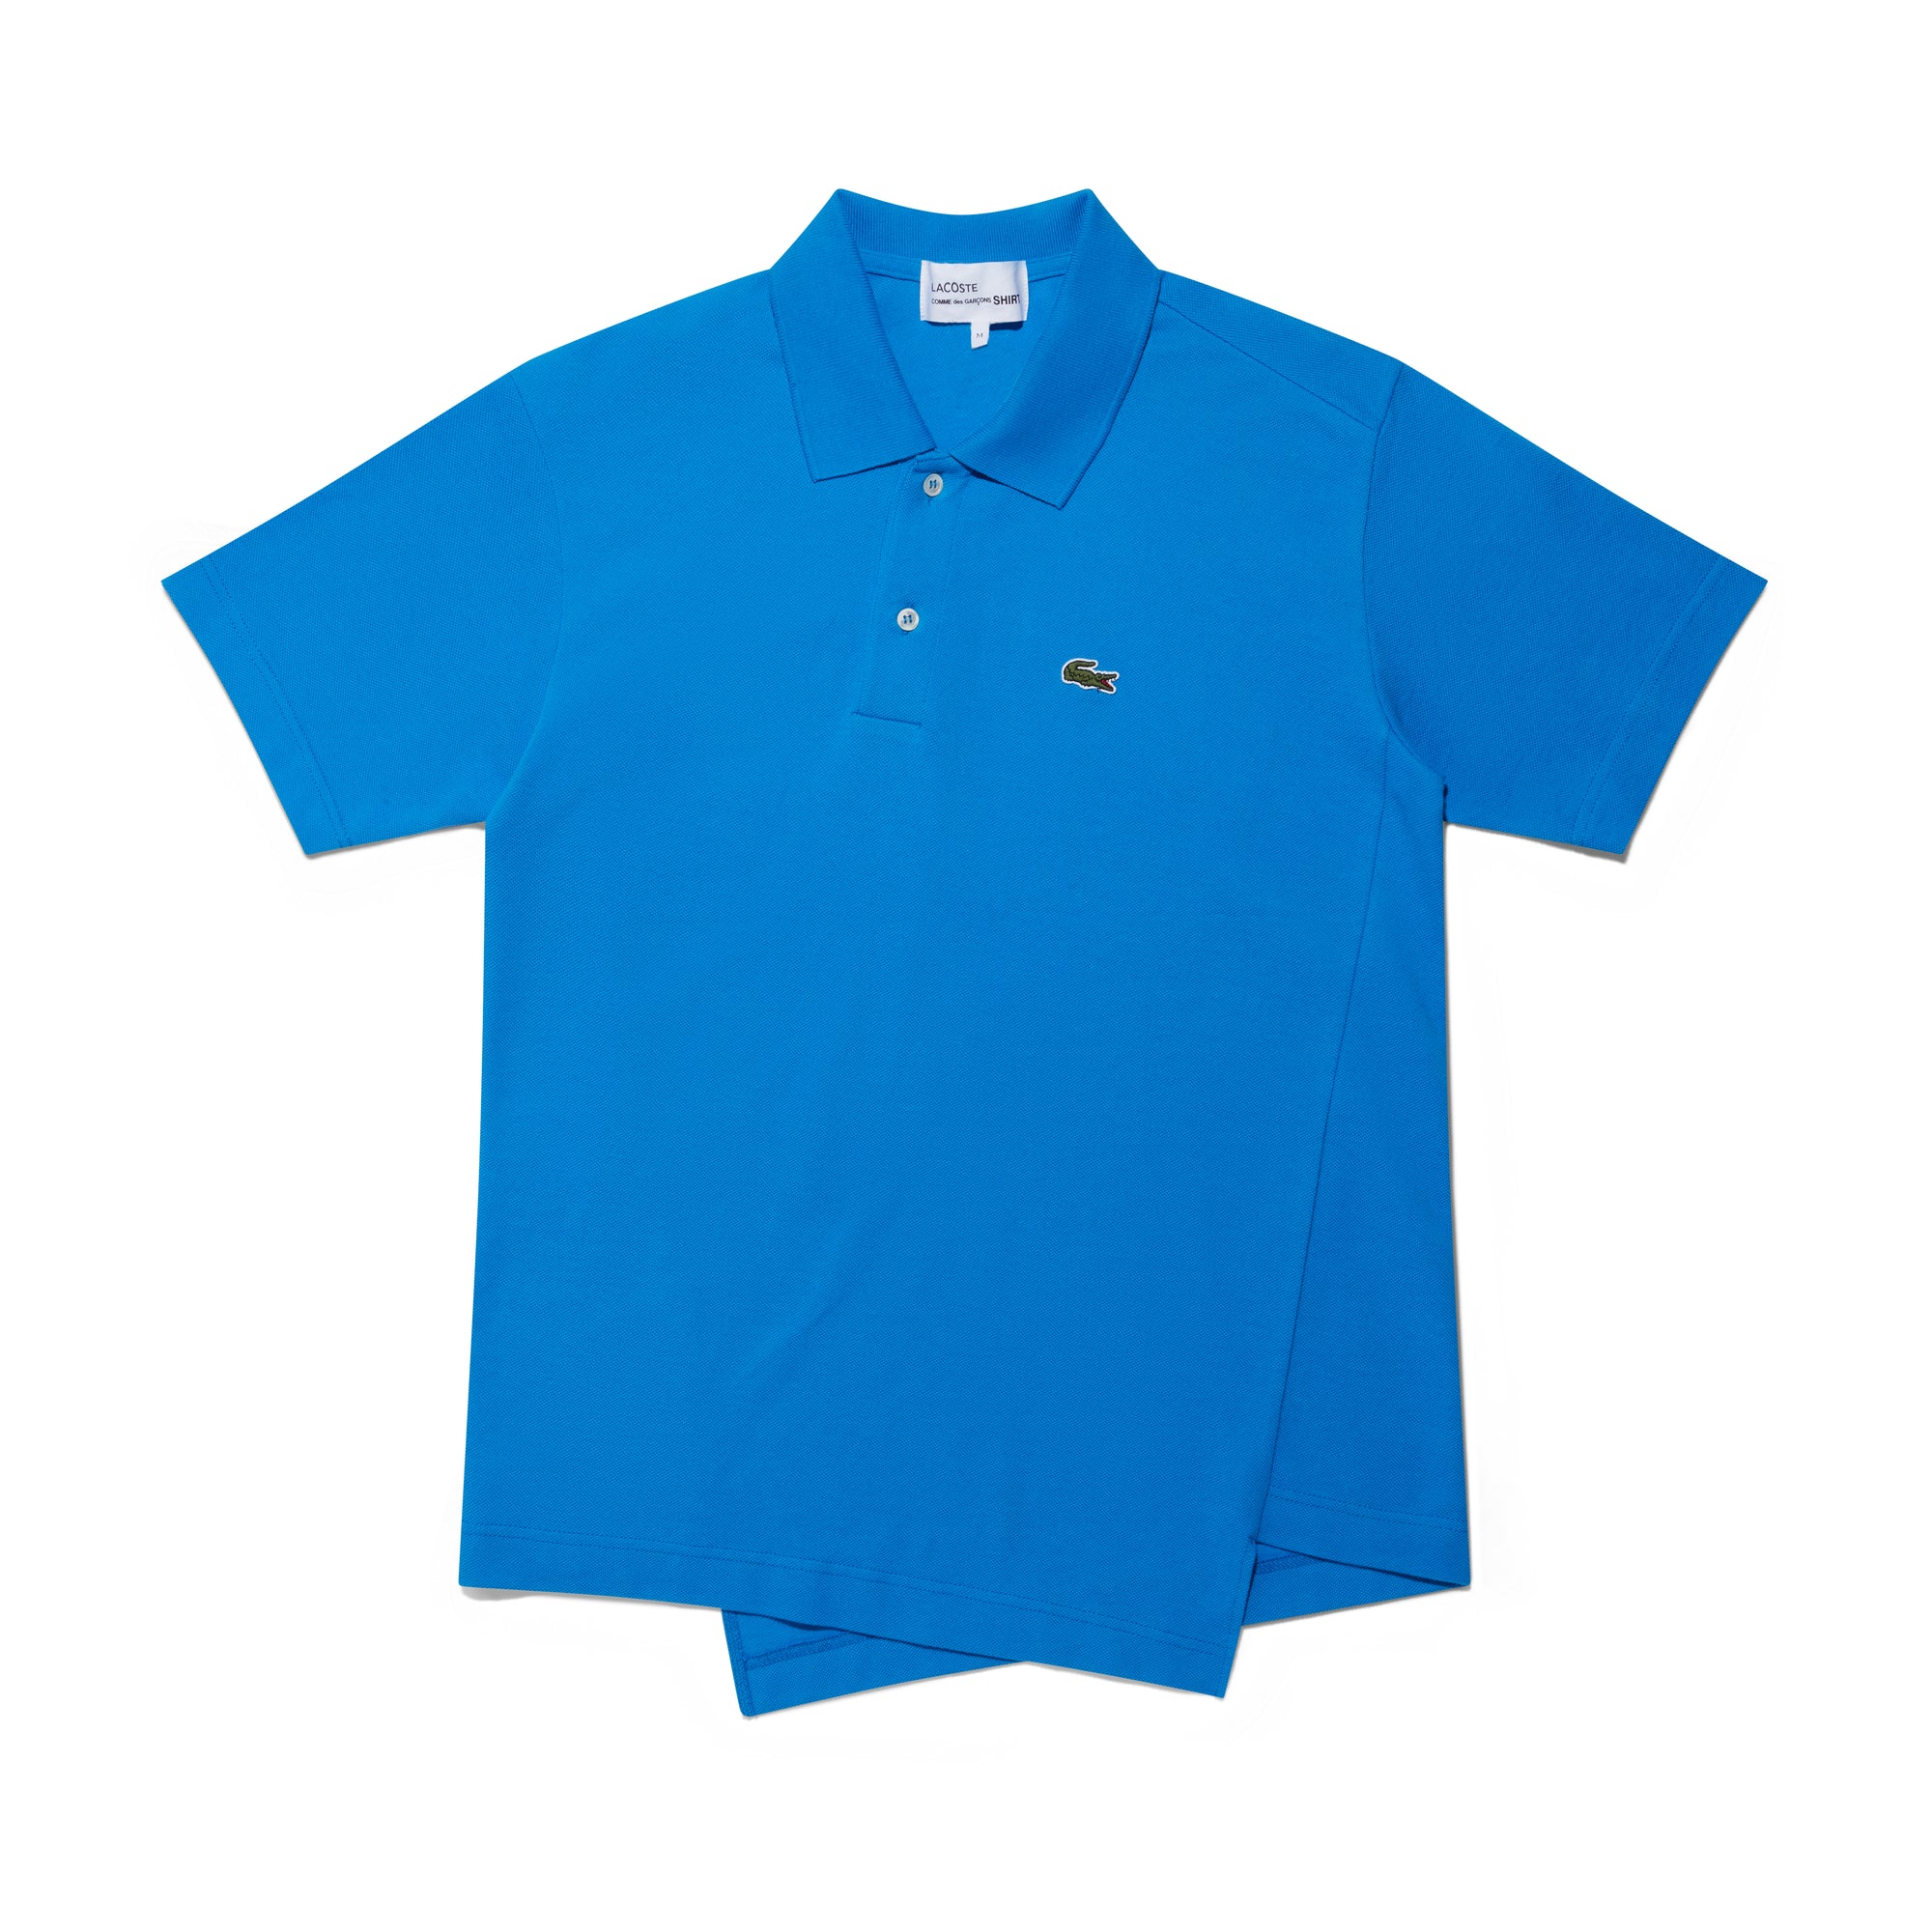 CDG Shirt - Lacoste Men’s Polo Shirt - (Blue) view 5